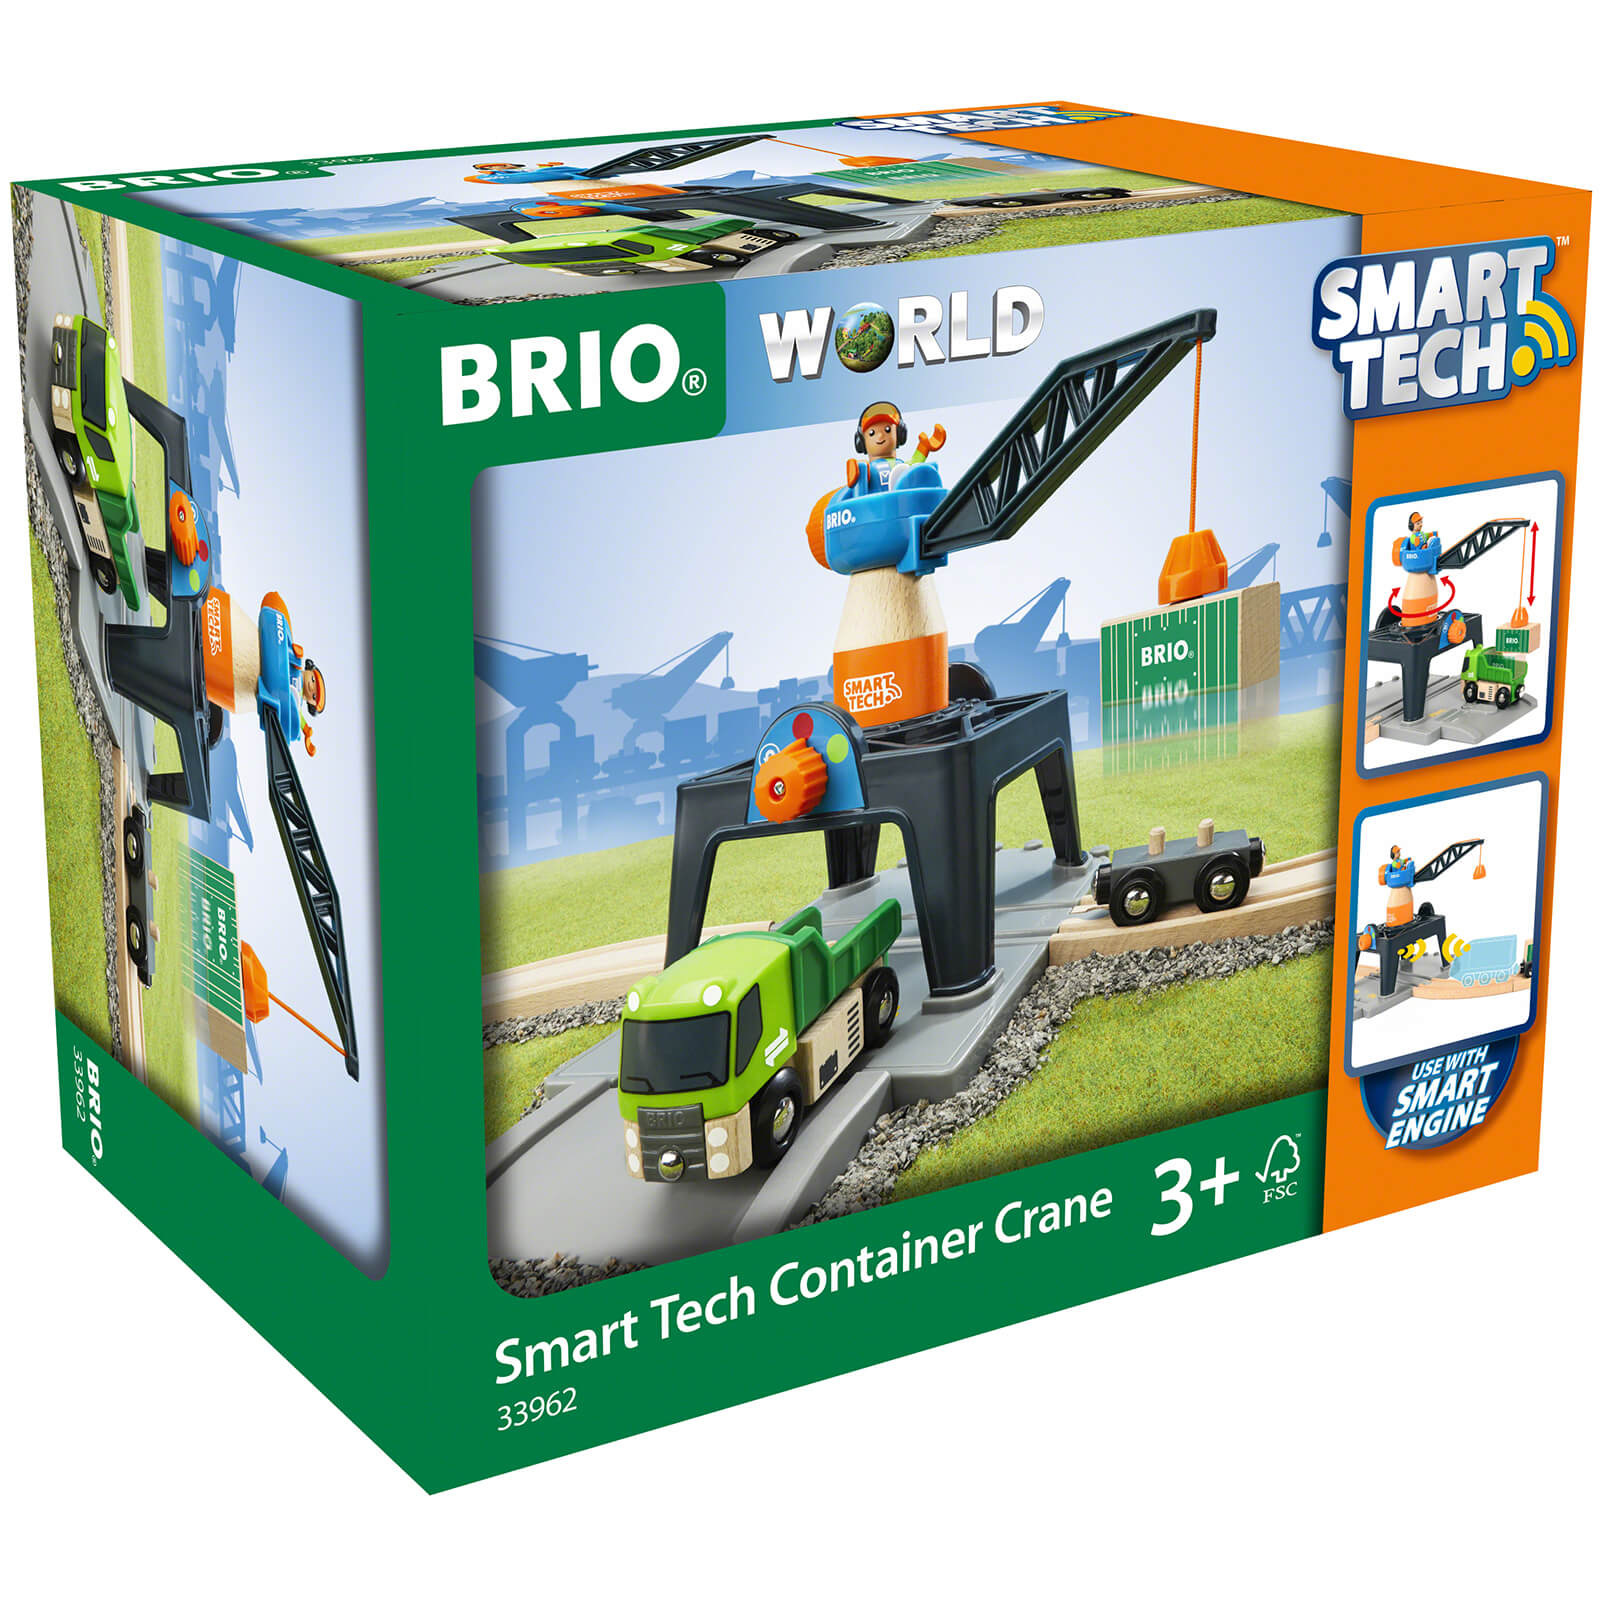 Brio Smart Tech Railway Container Crane